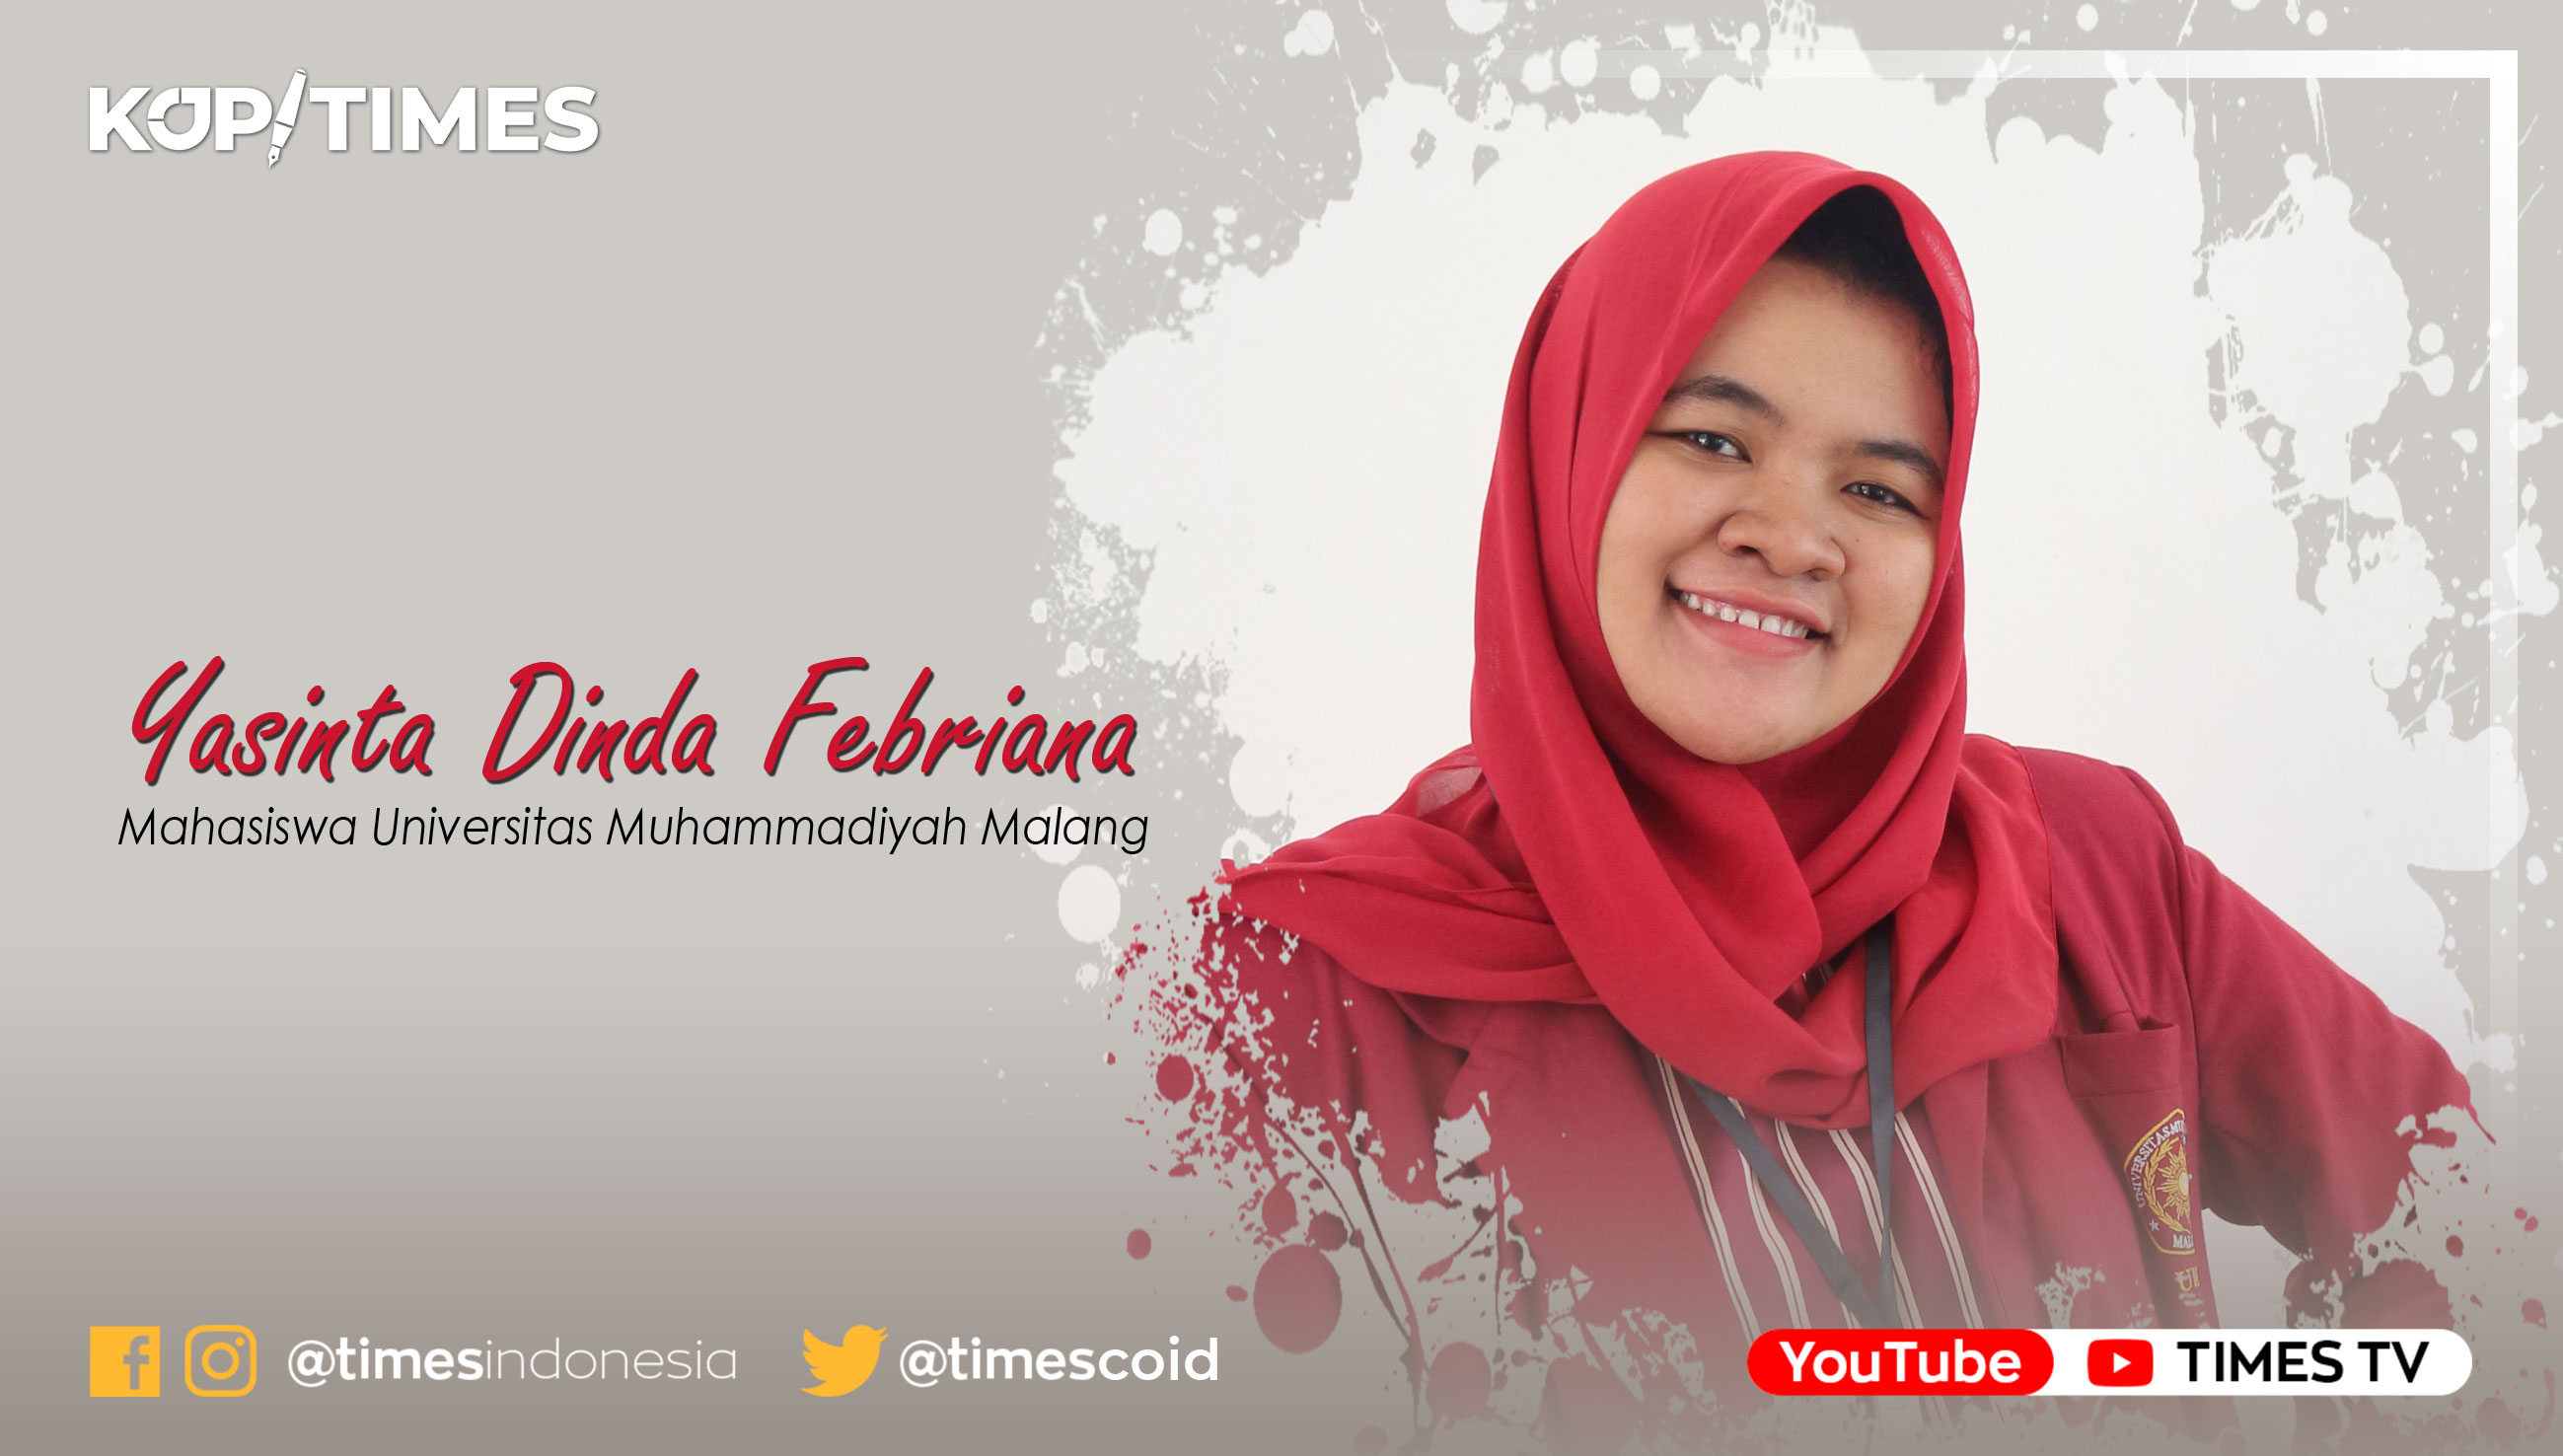 Yasinta Dinda Febriana, Mahasiswi jurusan Ilmu Hubungan Internasional dari Universitas Muhammadiyah Malang.